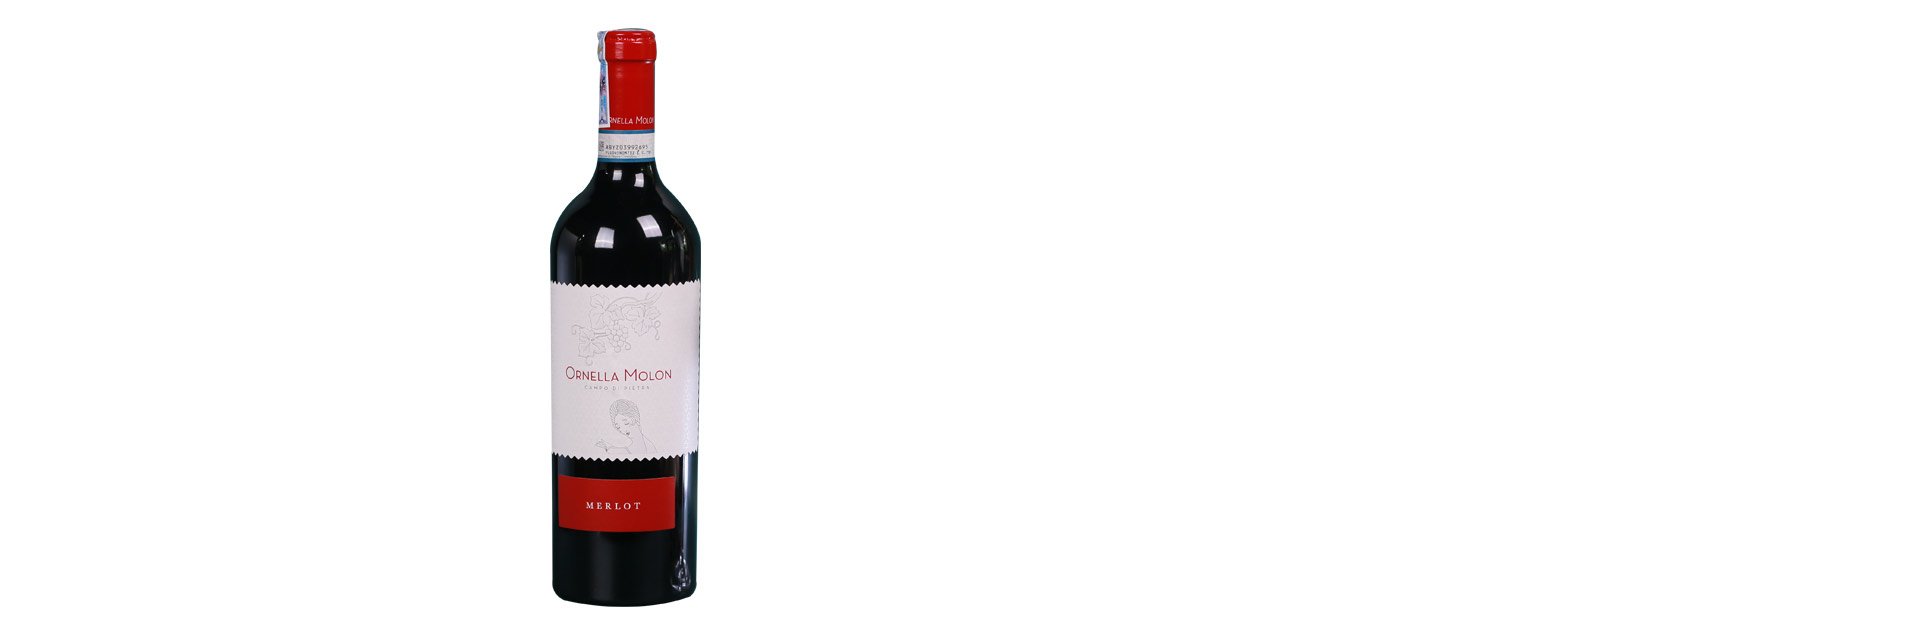 Rượu Vang Ý Ornella molon MERLOT (5% ABV*)